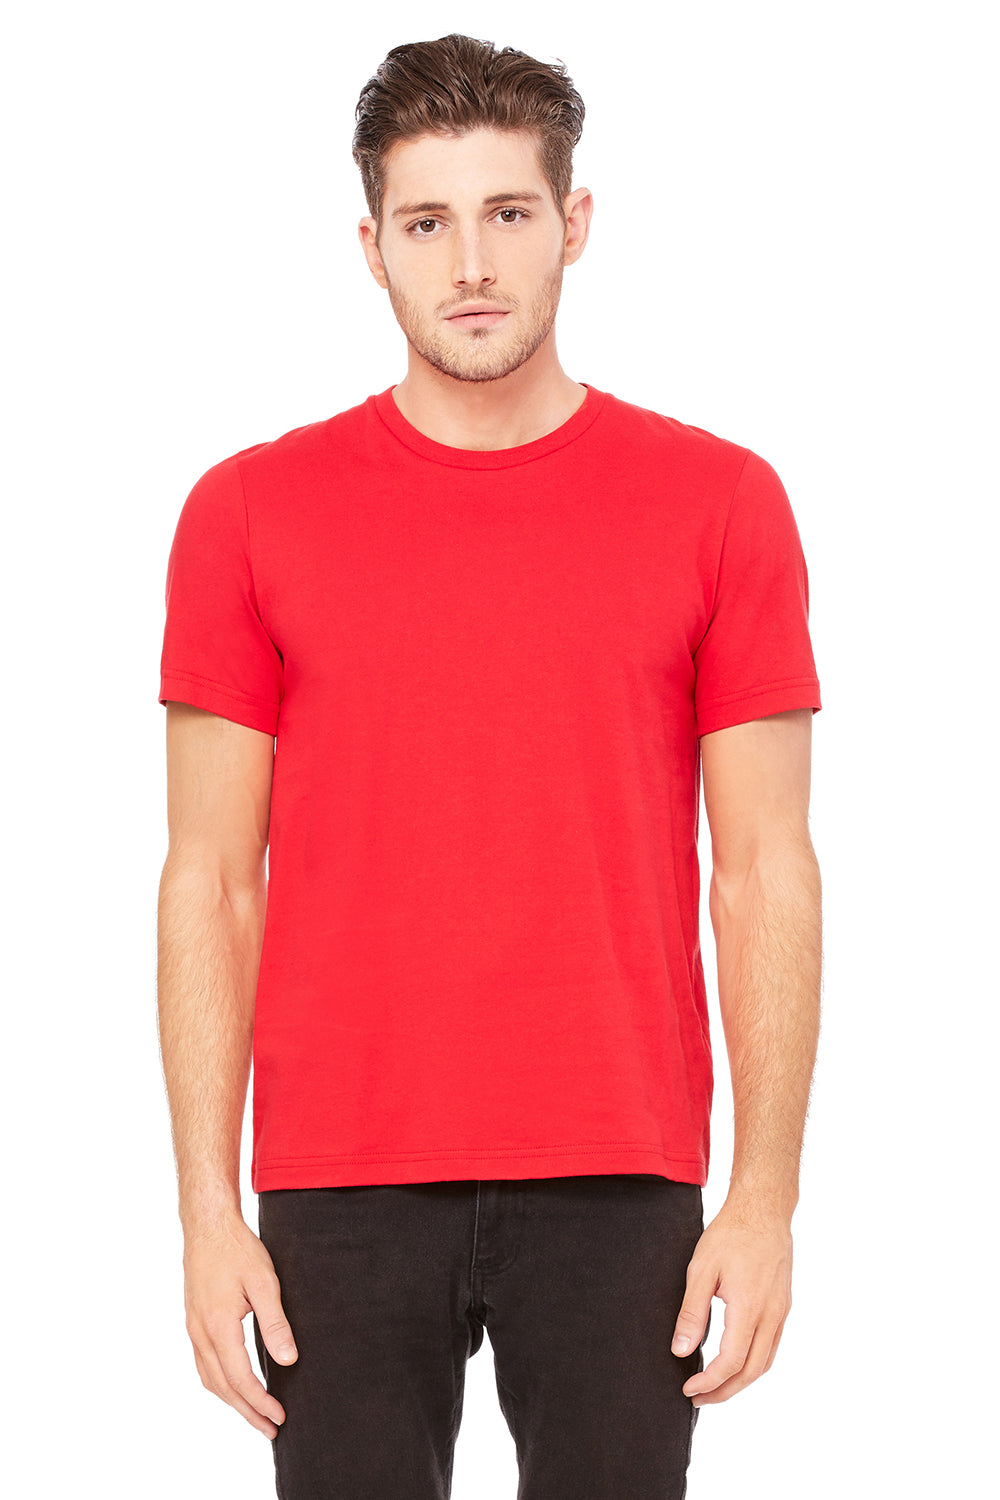 Bella + Canvas 3091 Mens Short Sleeve Crewneck T-Shirt Red Front